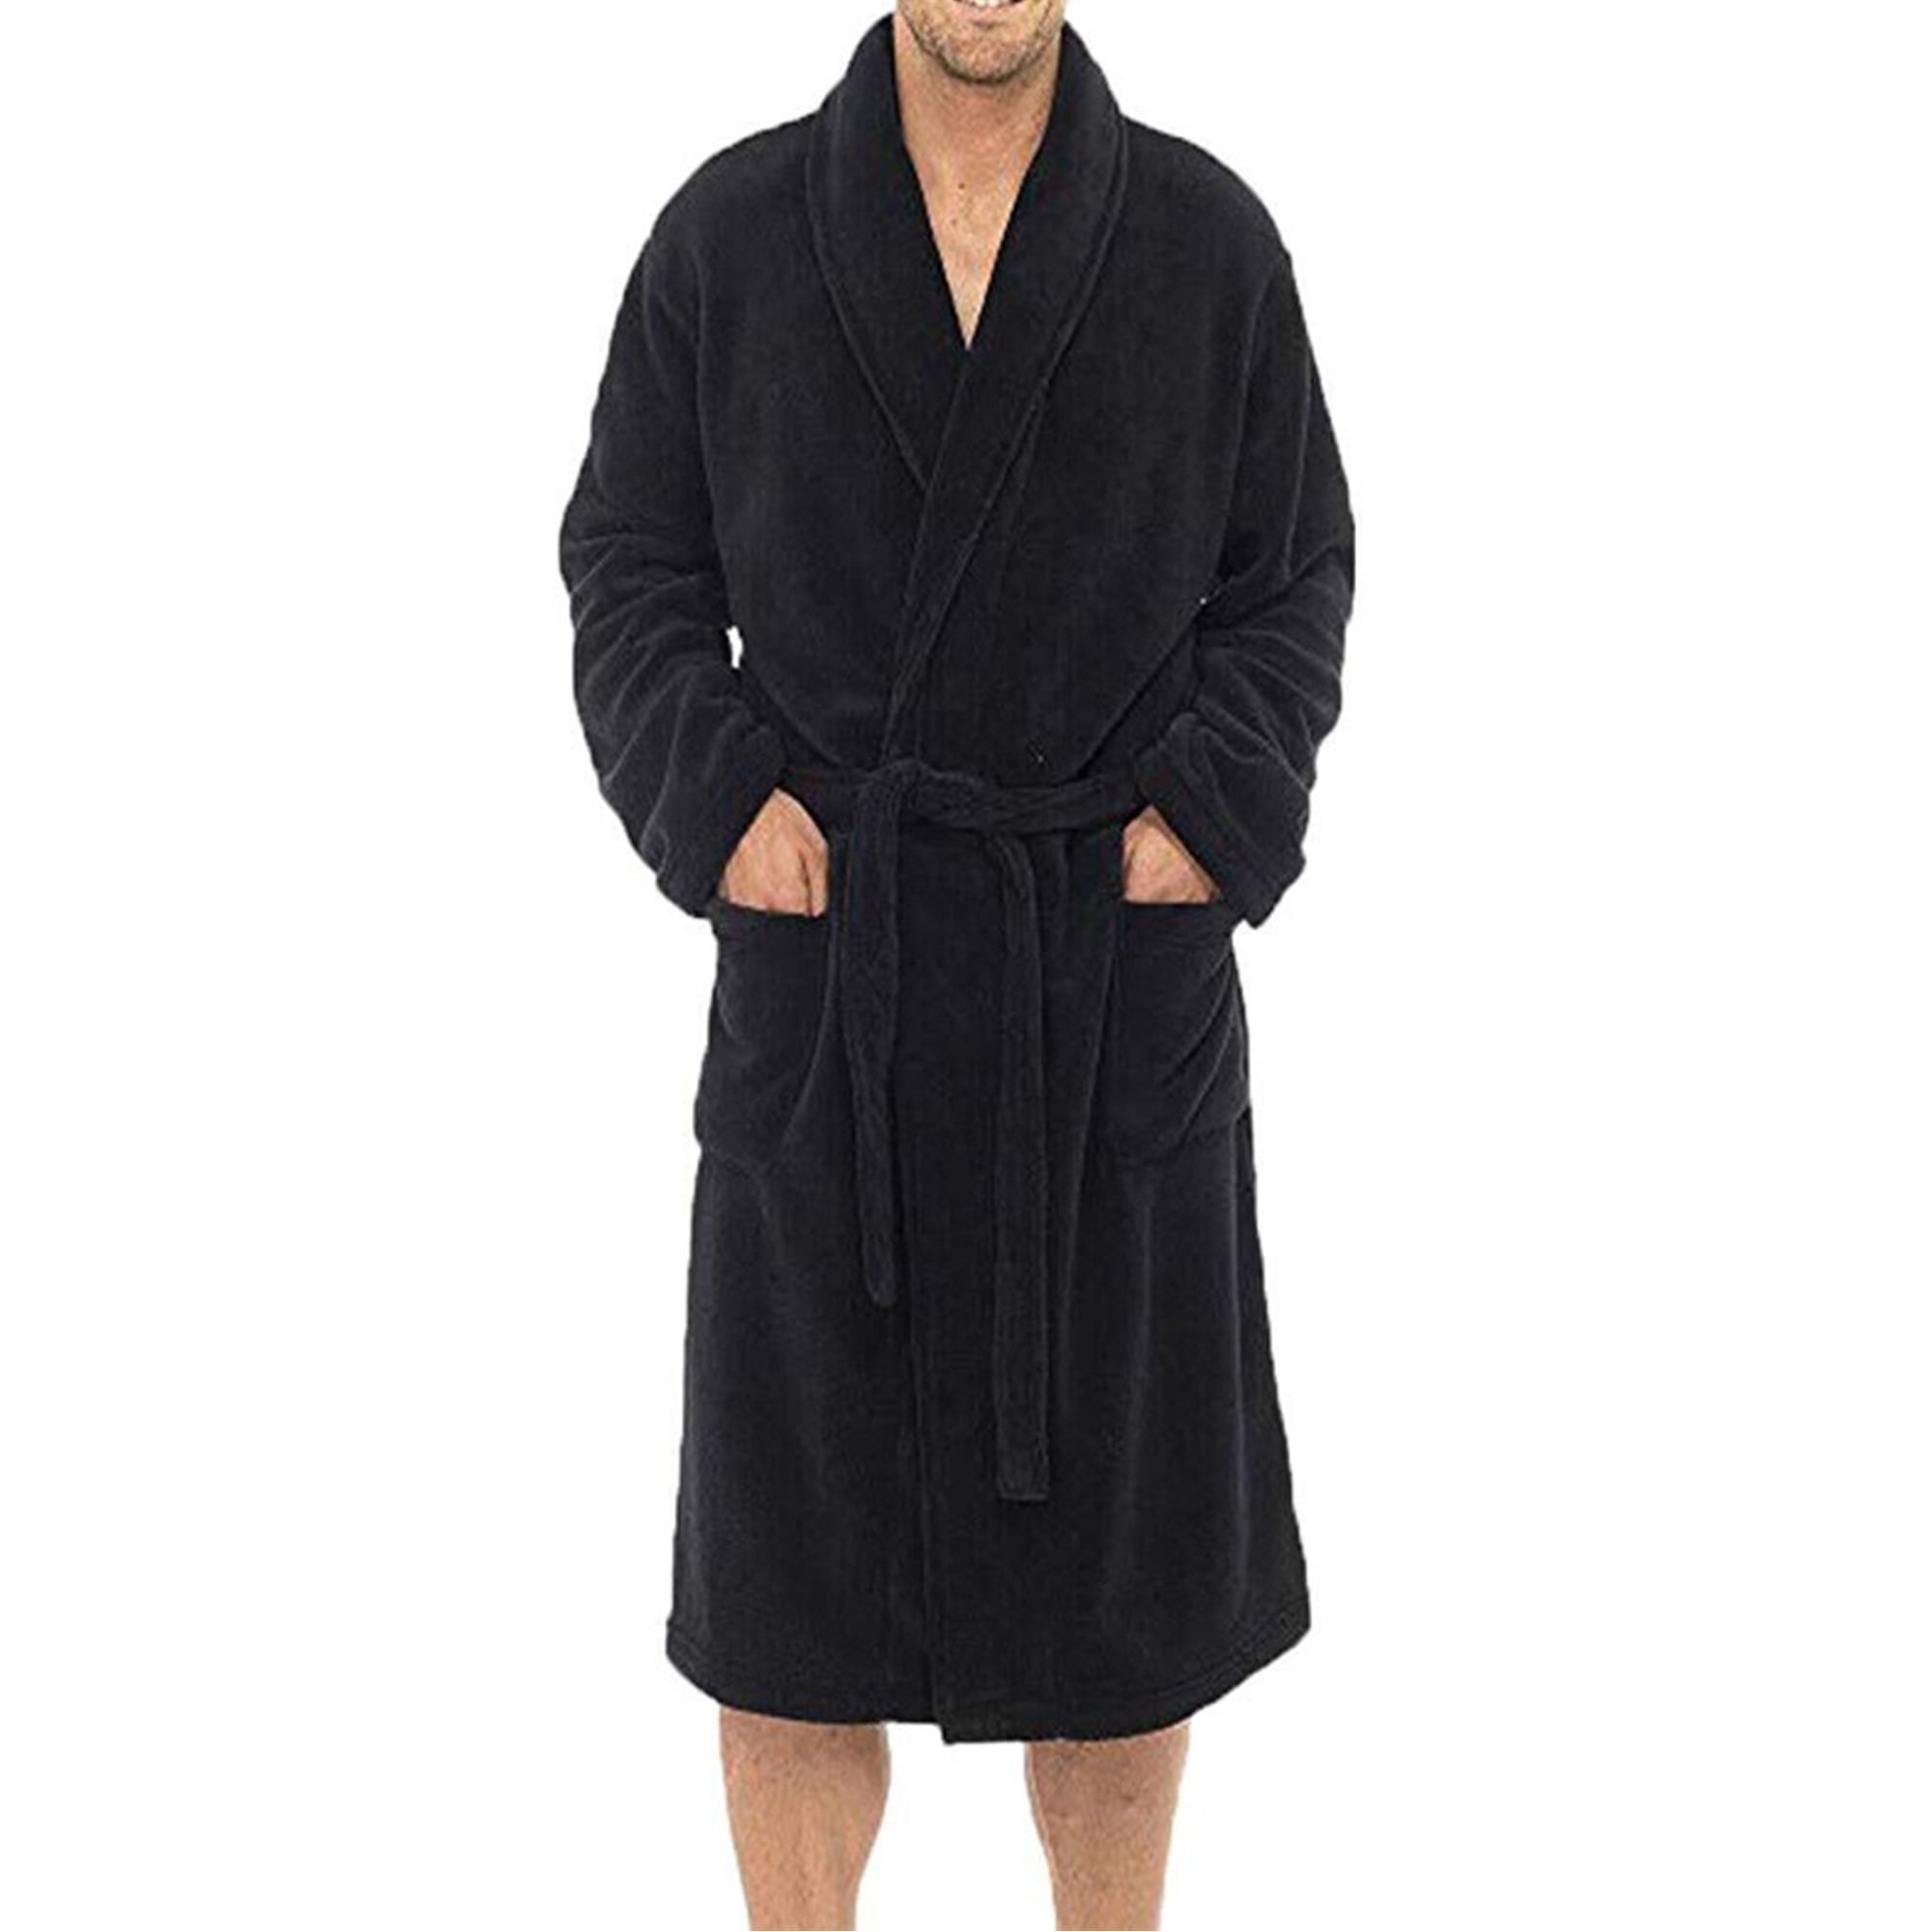 Men Gents Luxury SOFT Bath Robe Housecoat Dressing Gown Bathrobe Size M L XL XXL 